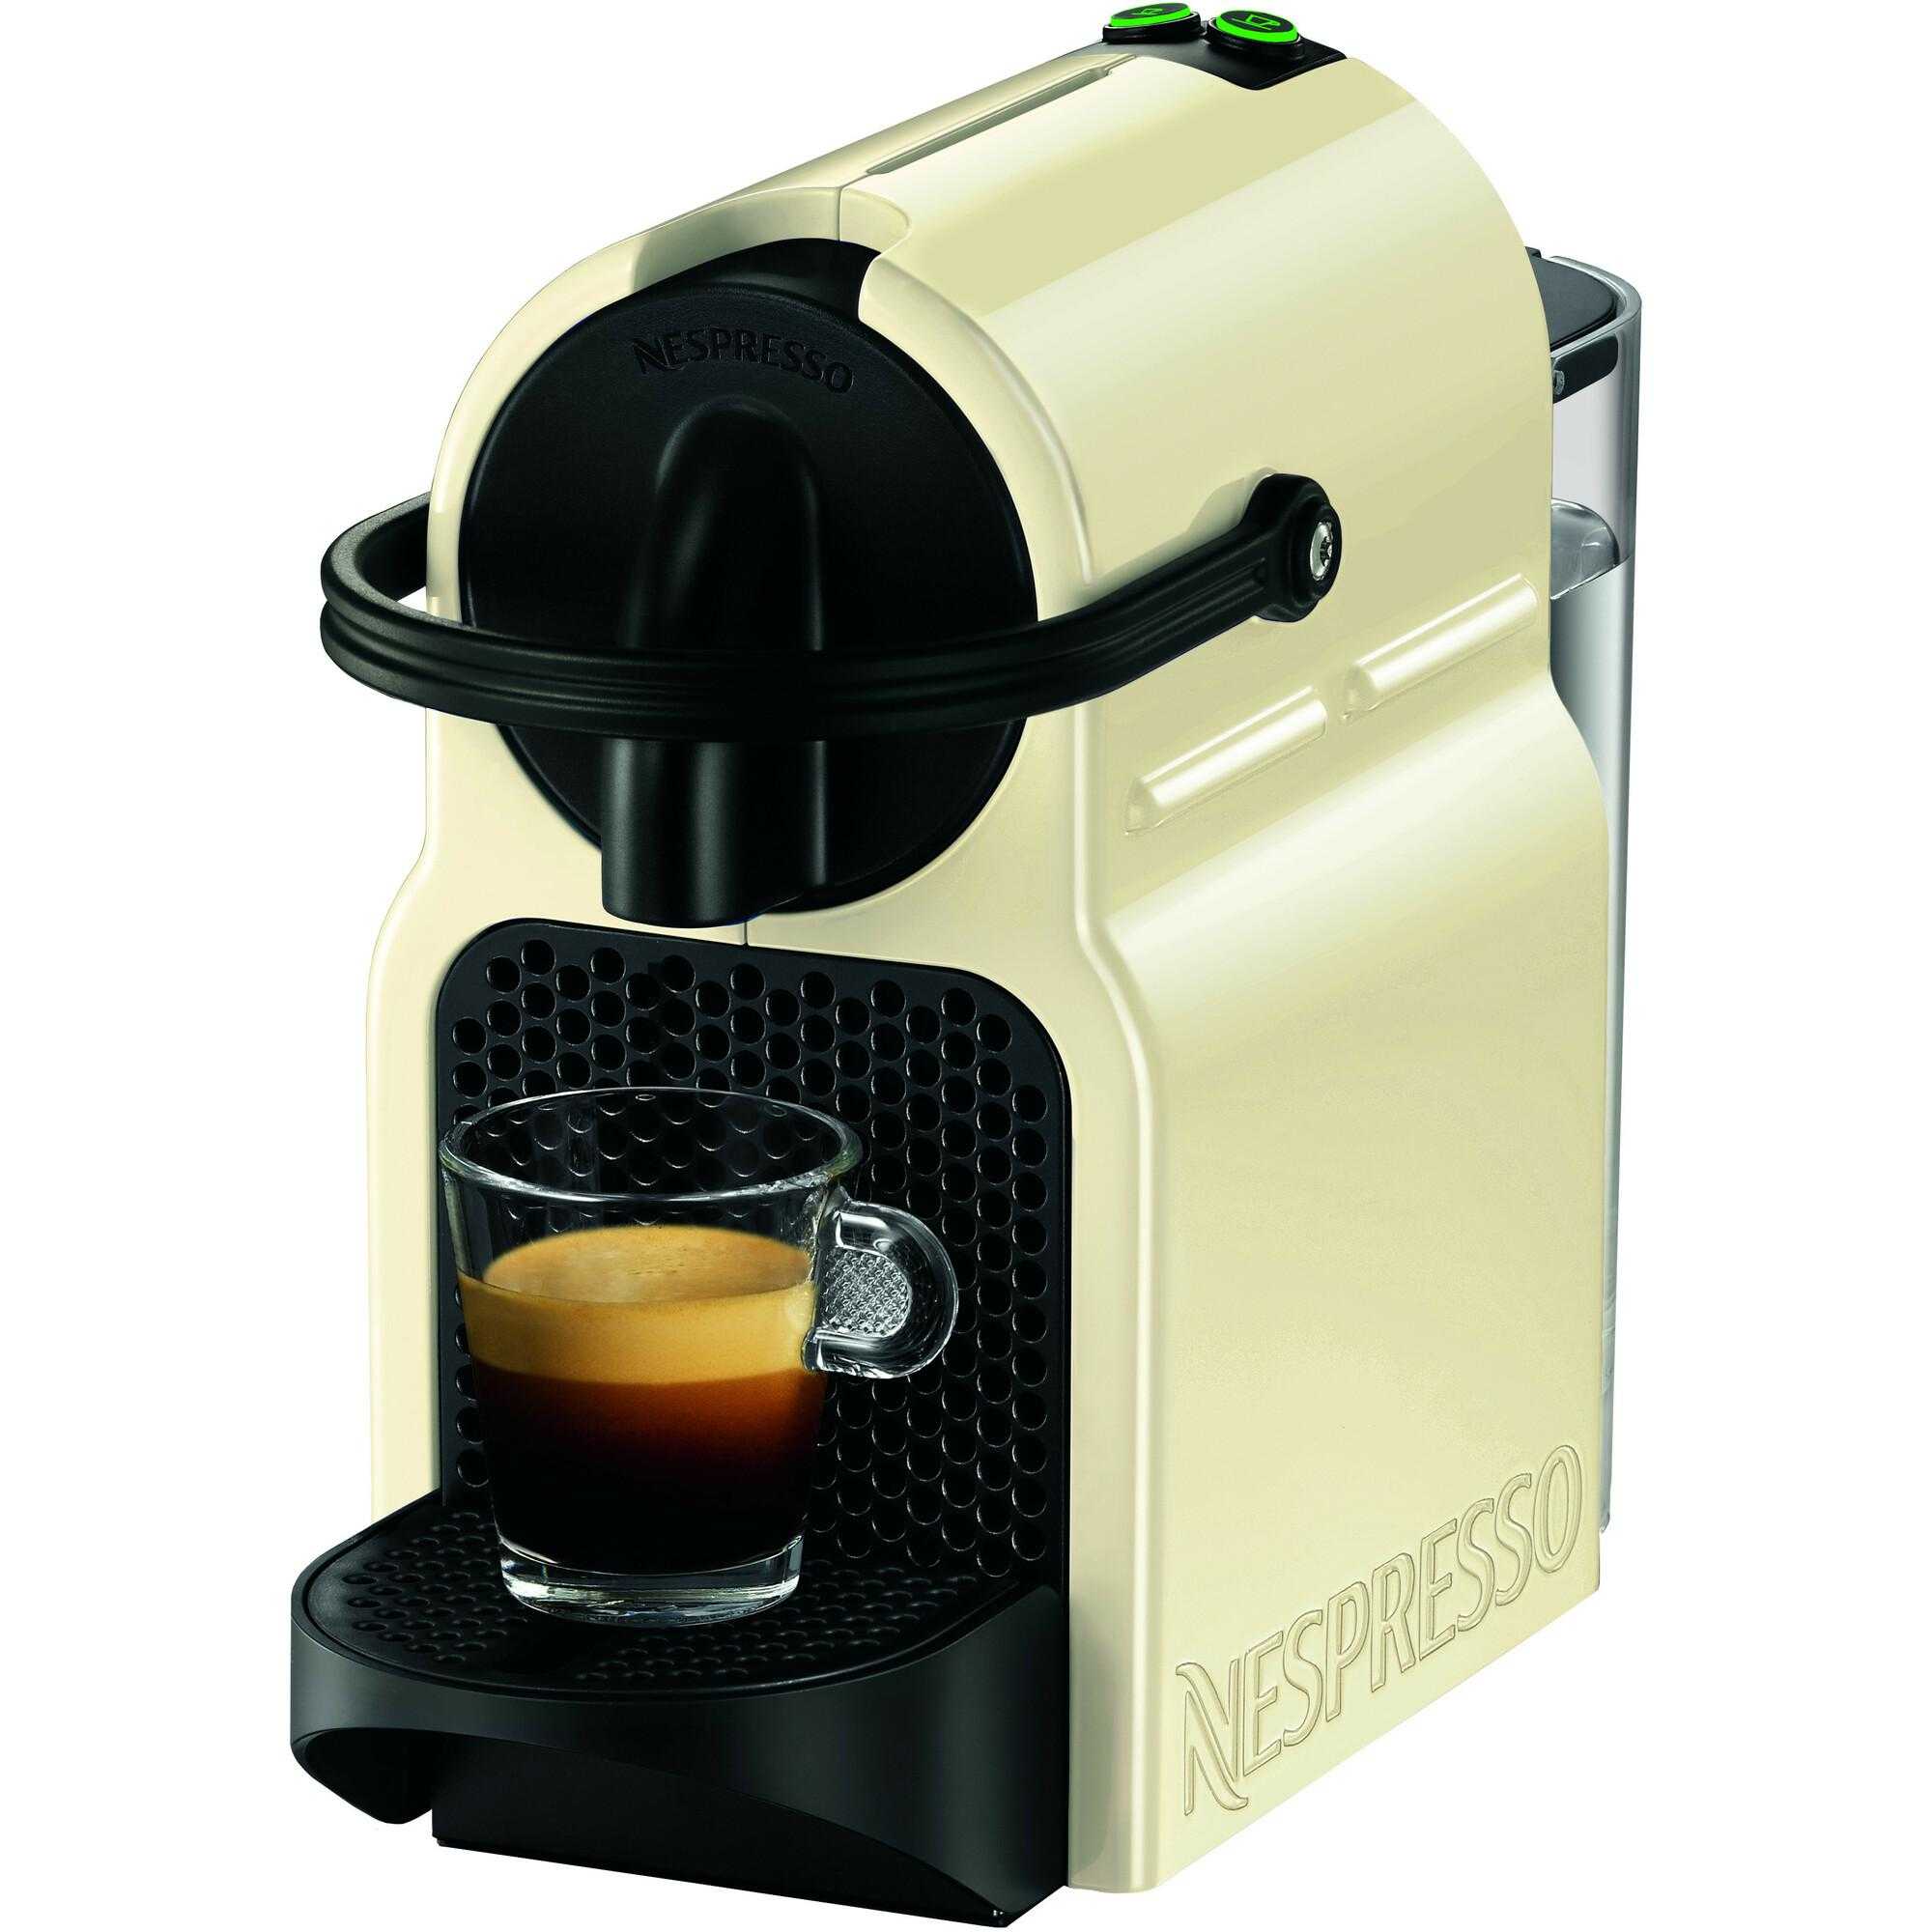  Espressor Nespresso Inissia D40, 1260 W, 0.7 L, 19 bar, Crem 